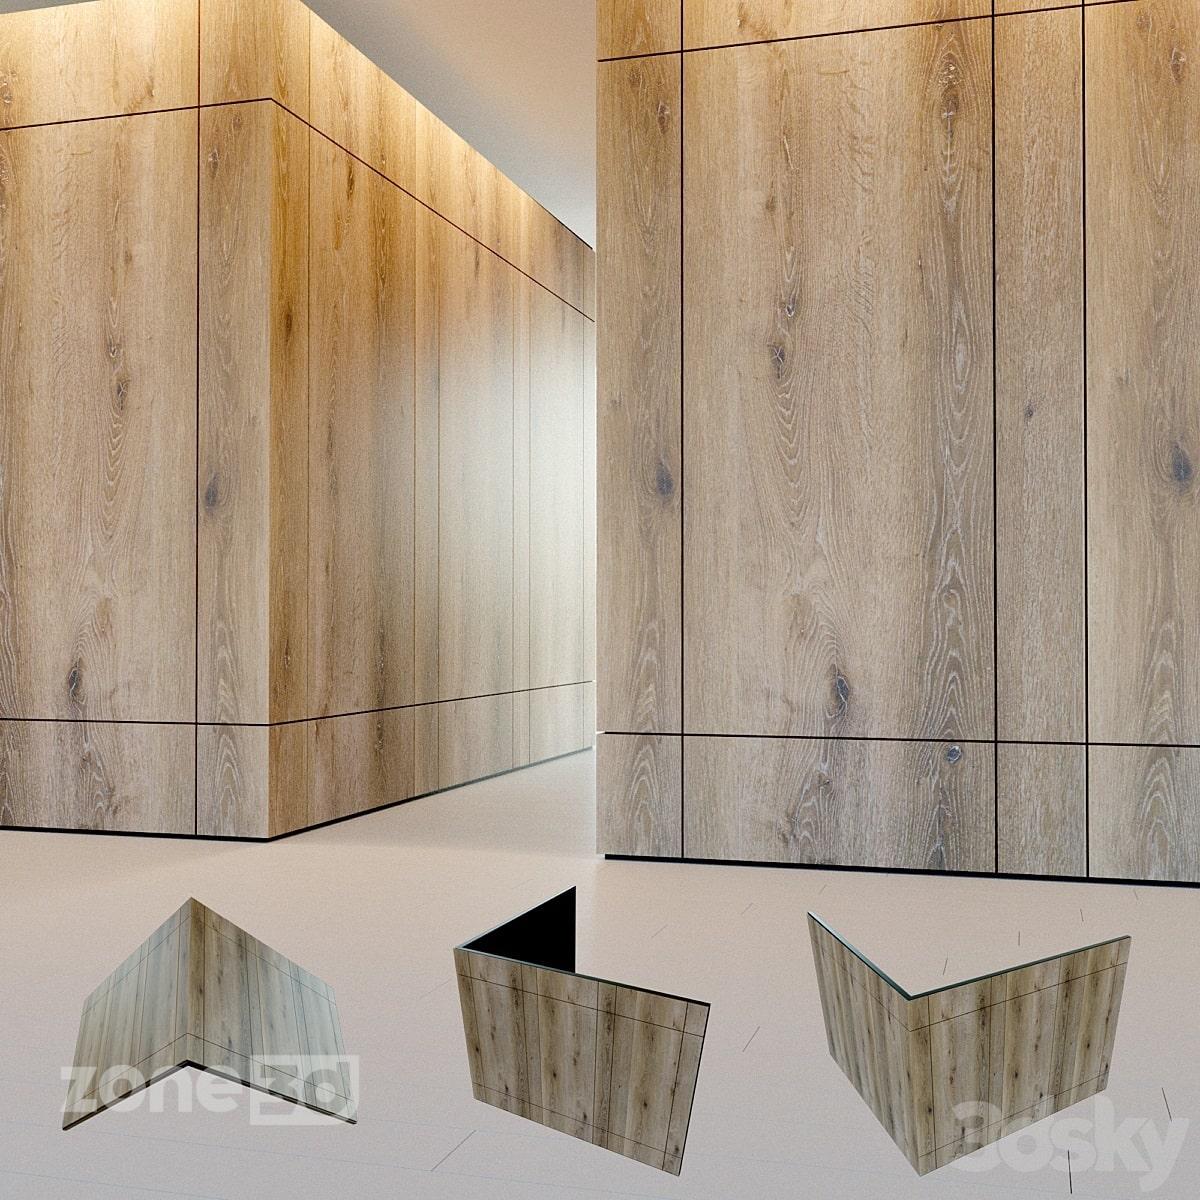 آبجکت پانل اِل شکل سه بعدی دکوری مدرن چوبی و فلزی